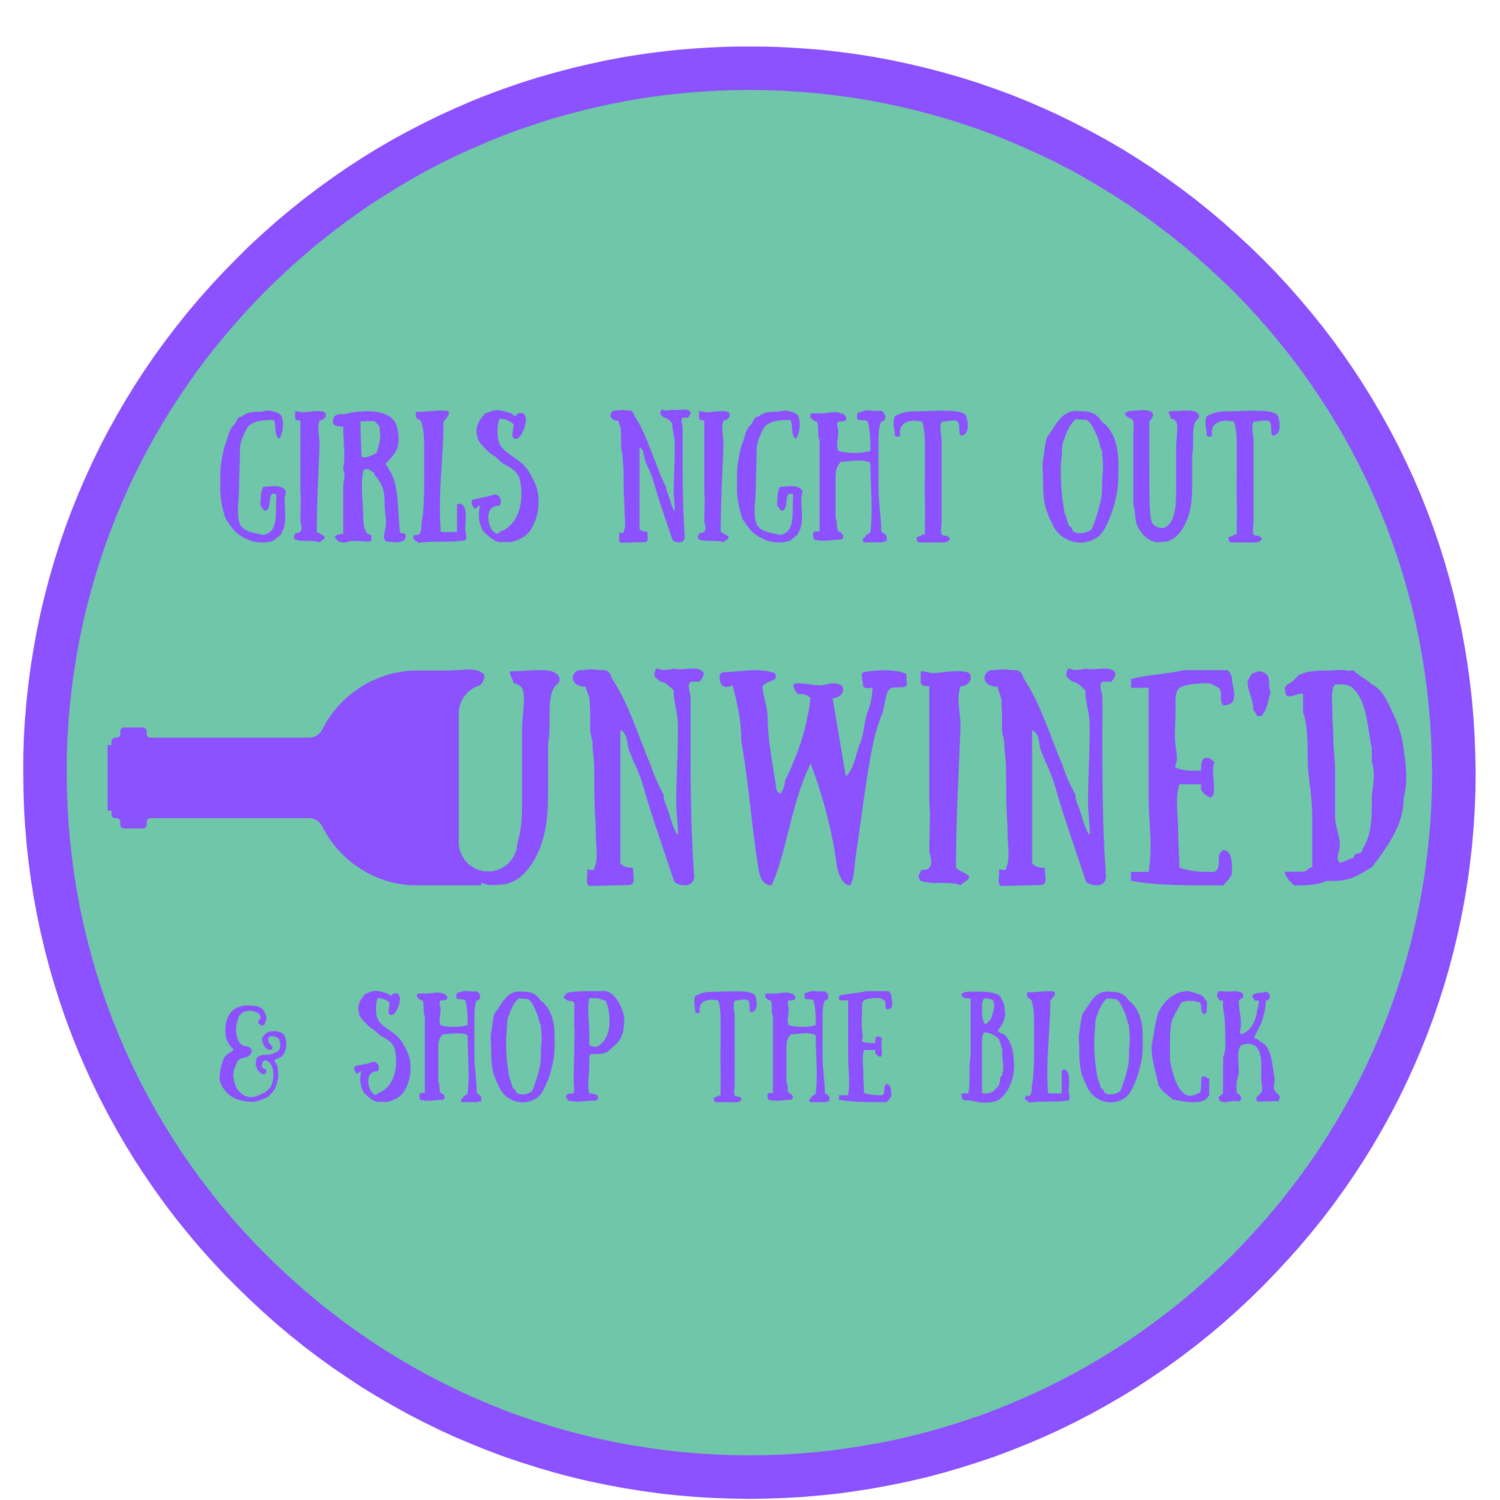 June 15 Unwine'd & Shop the Block